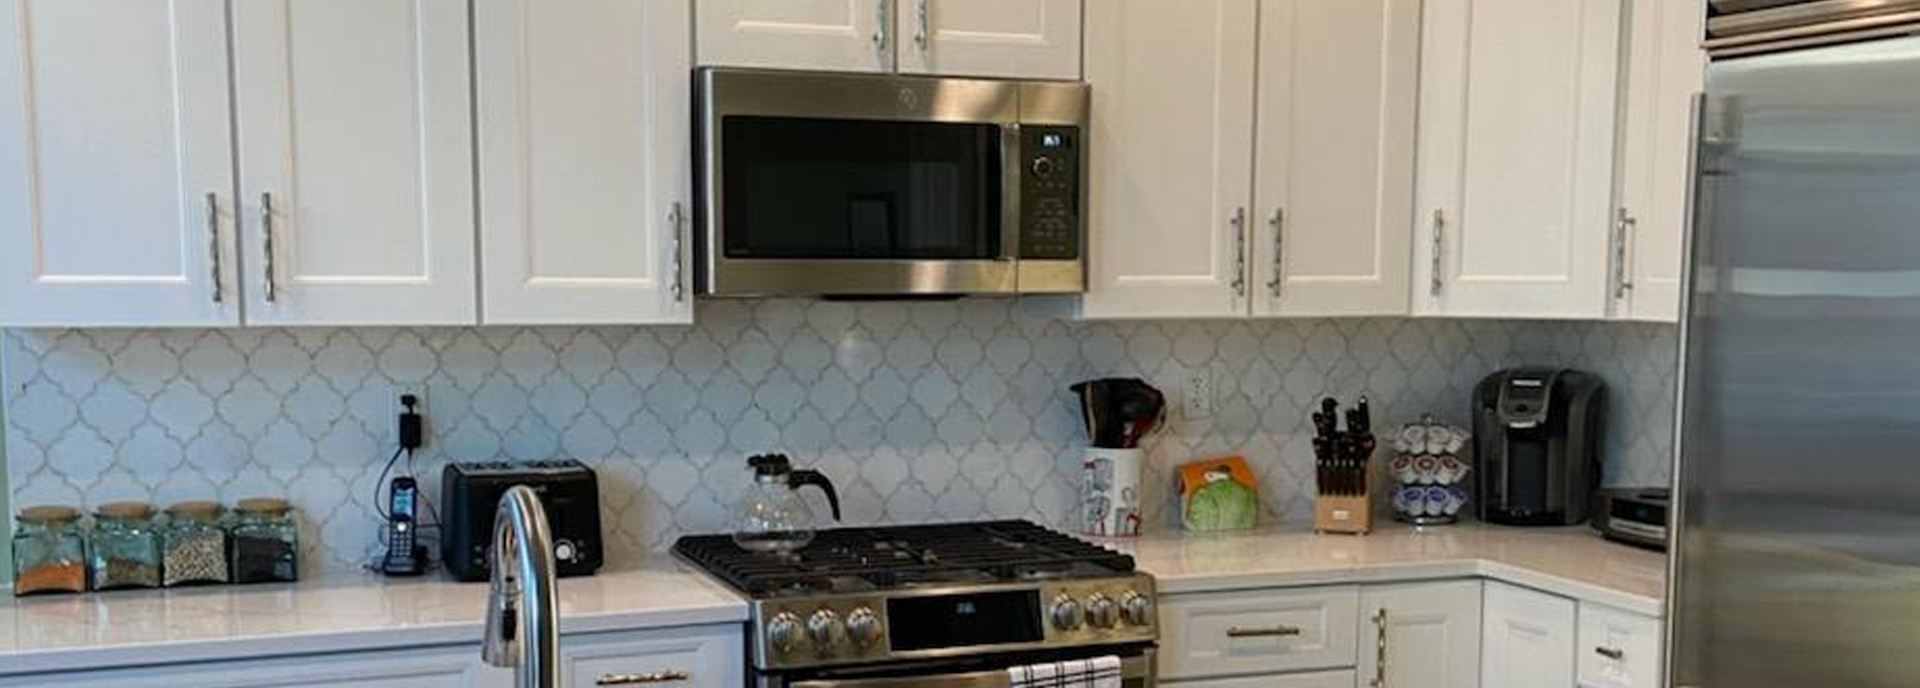 Professional Kitchen Cabinet Refinishing Tarrytown, NY